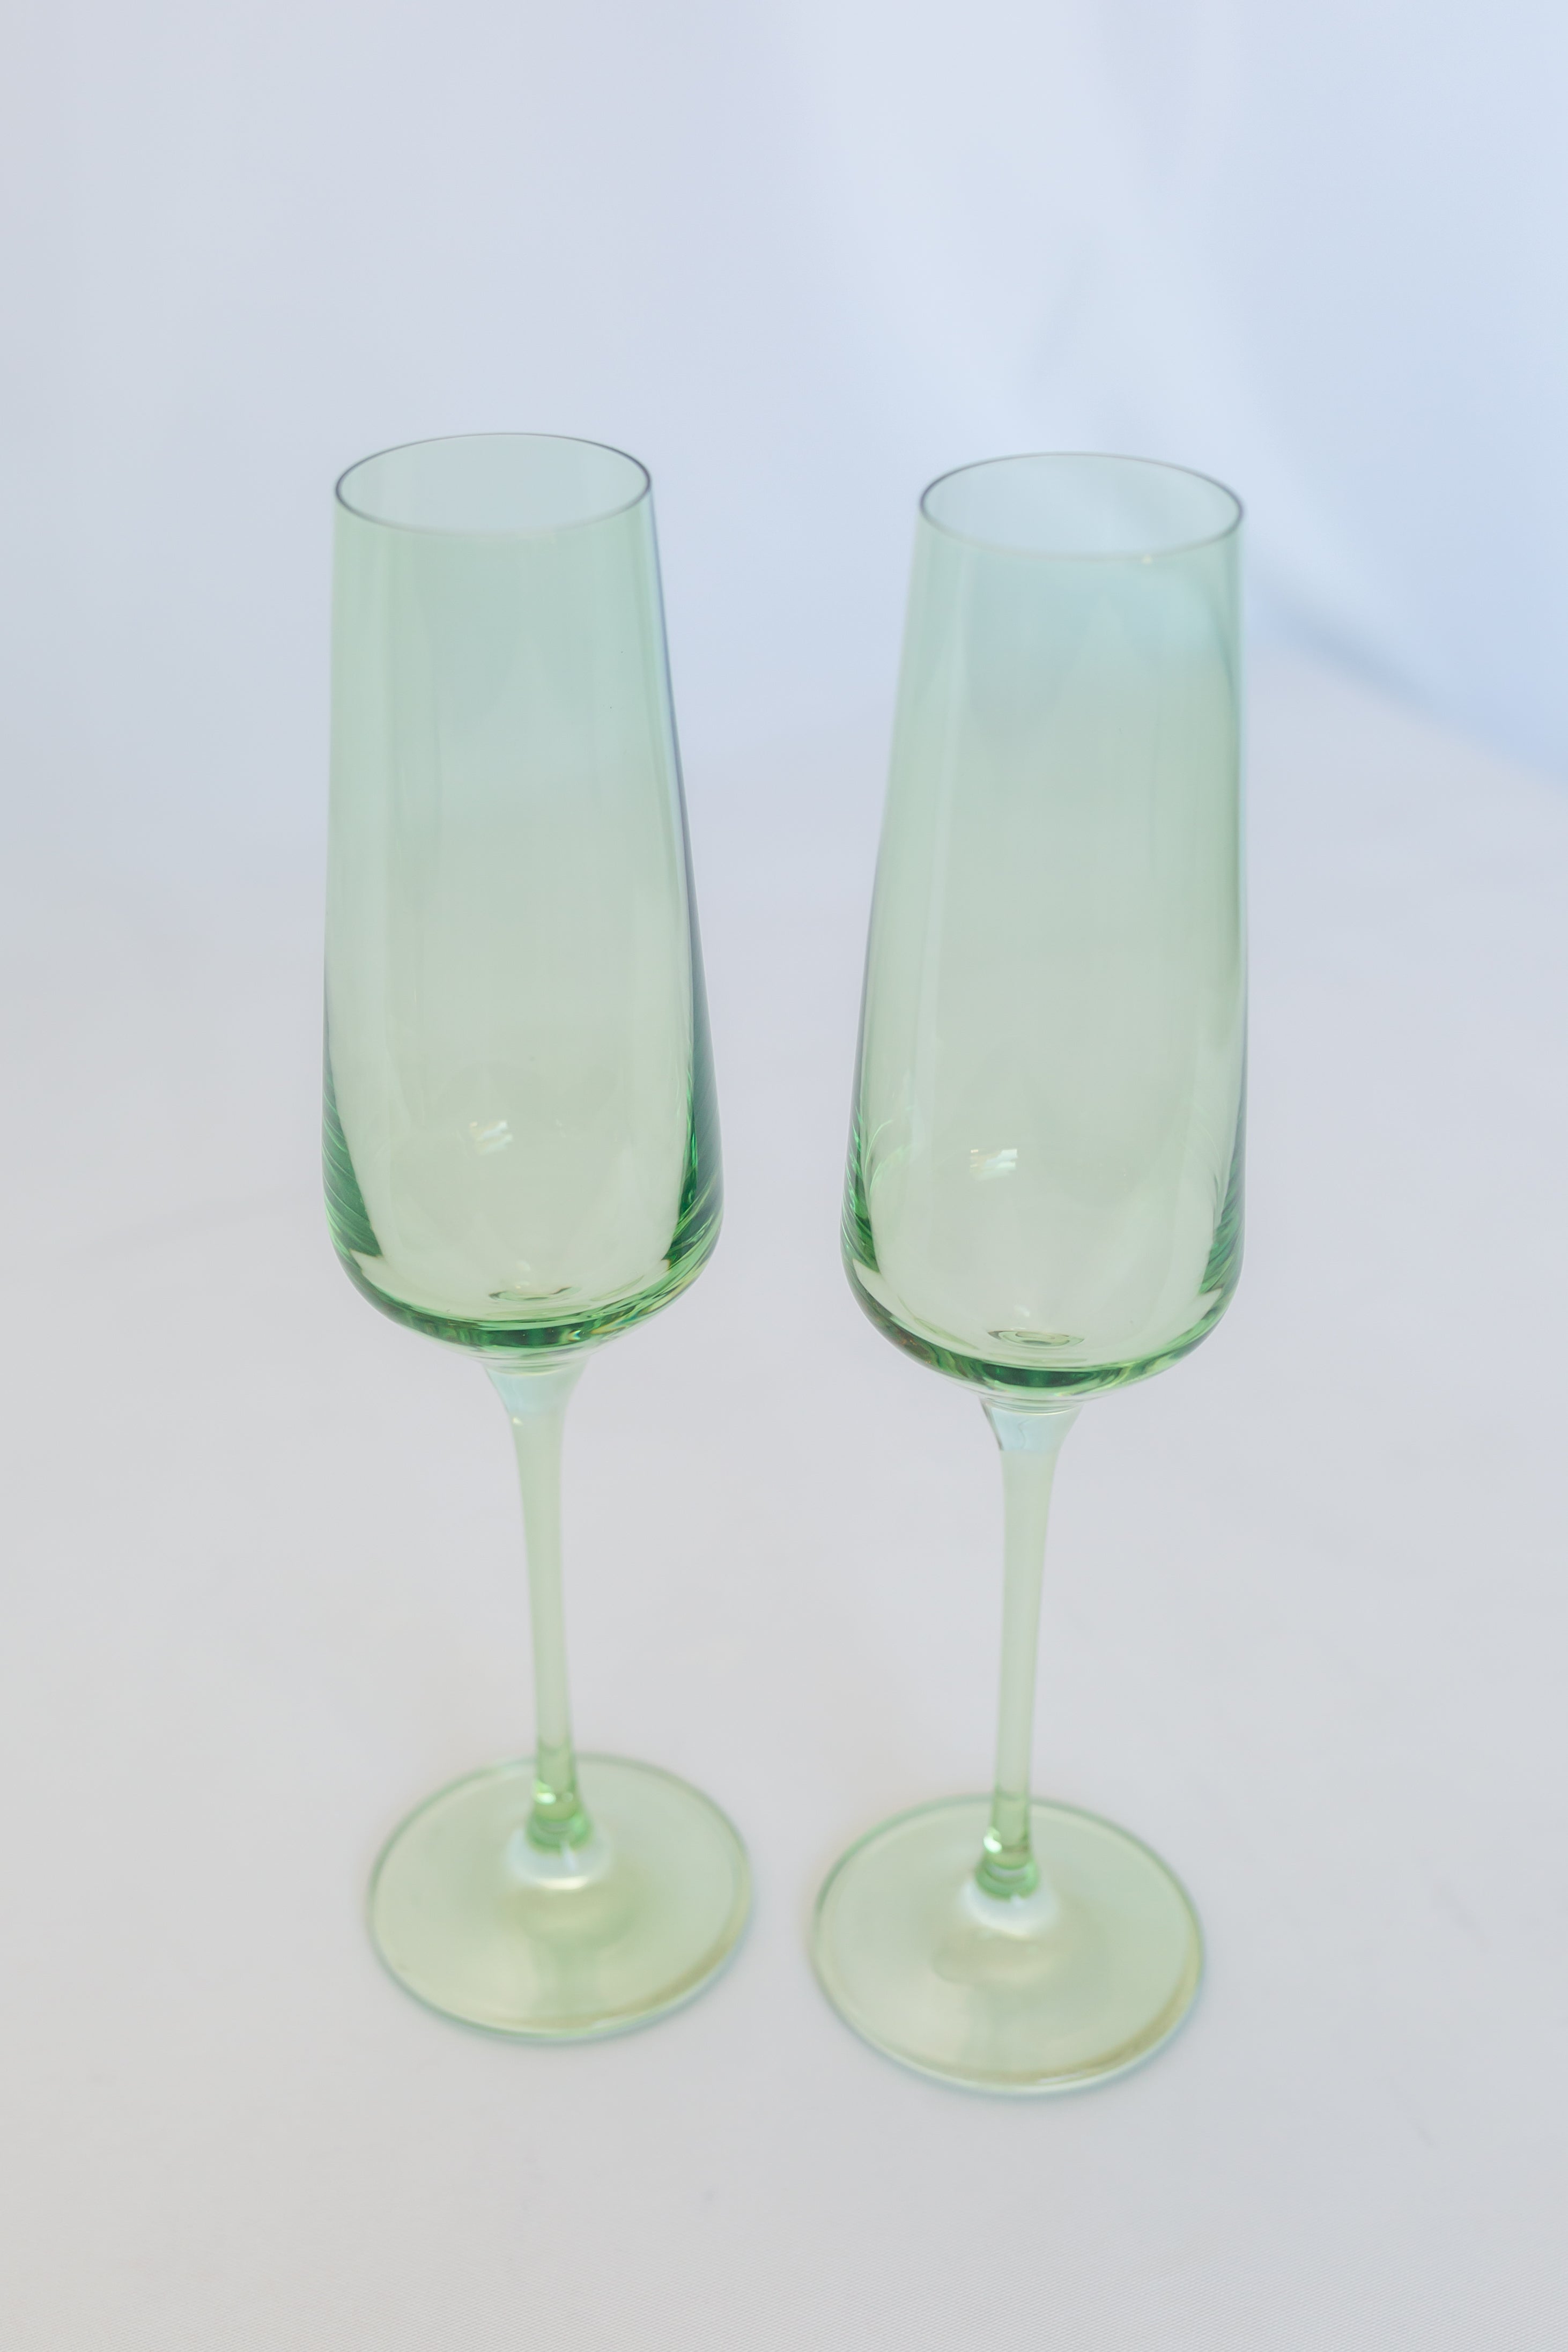 Estelle Colored Champagne Flute - Set of 2 {Mint Green}